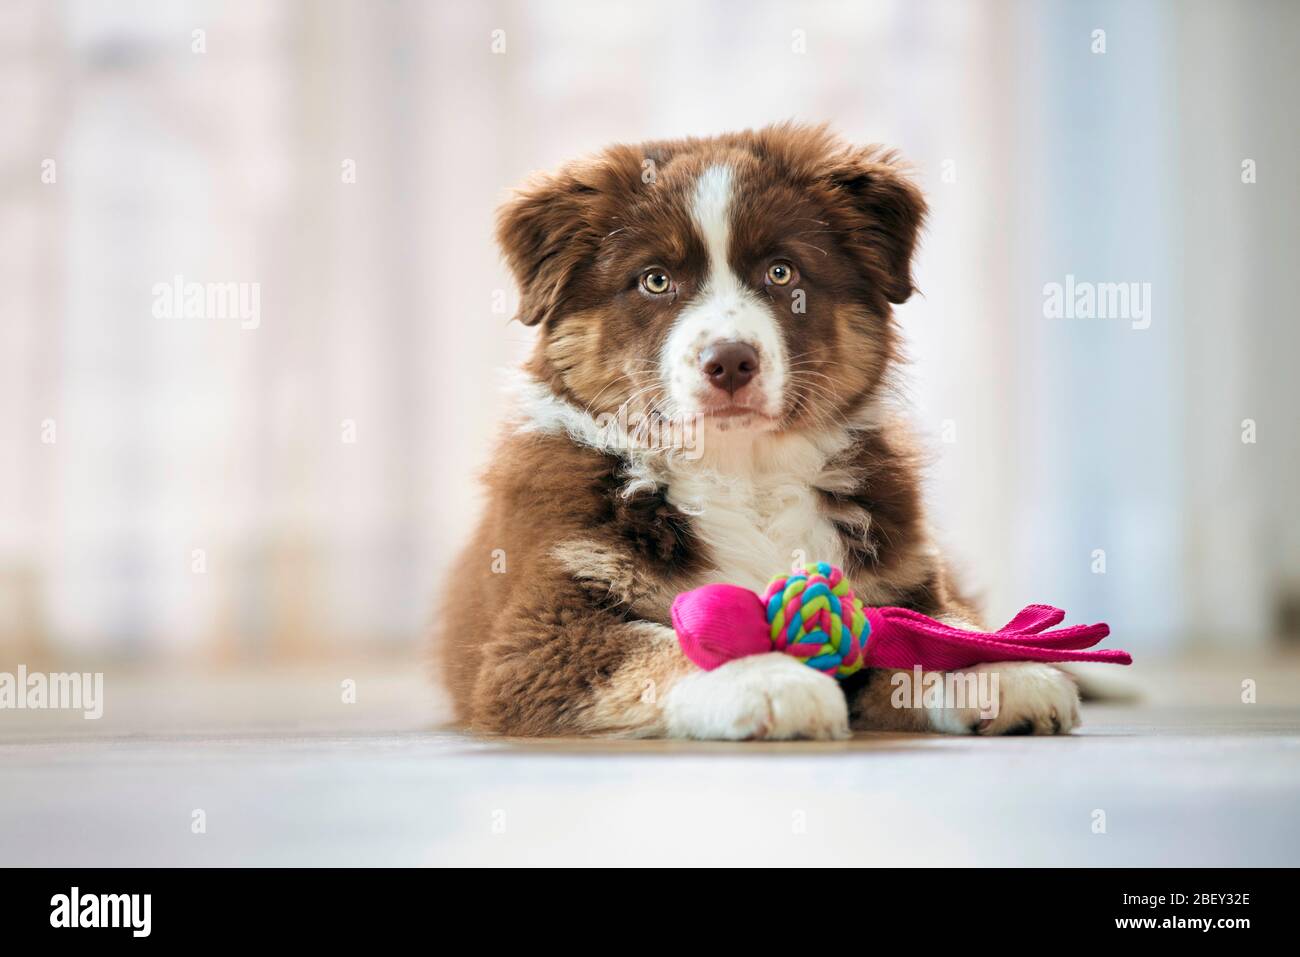 Australian Shepherd. Puppy lying on wooden floor, with toy among its paws. Germany Stock Photo